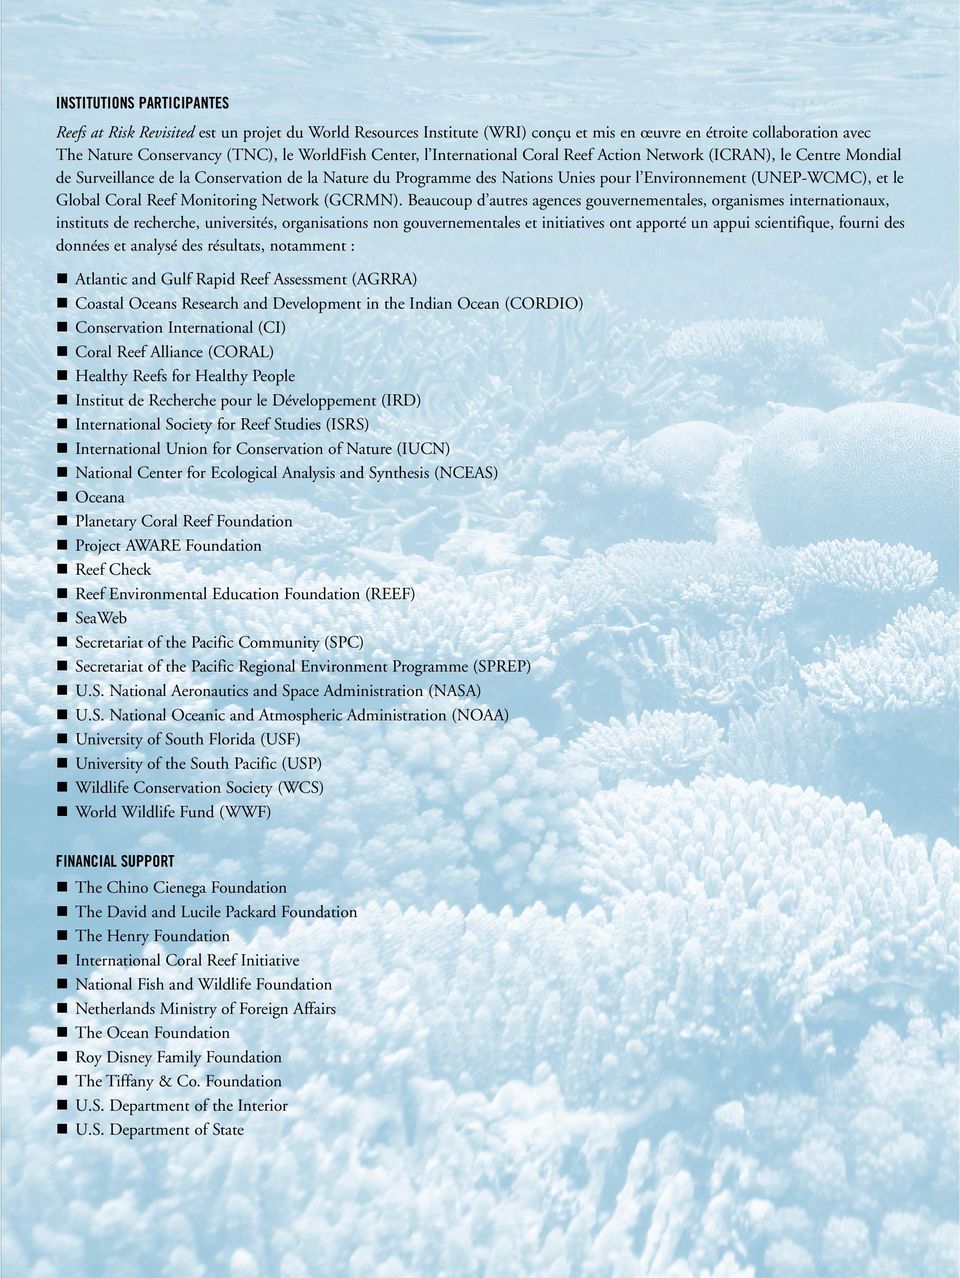 Global Coral Reef Monitoring Network (GCRMN).